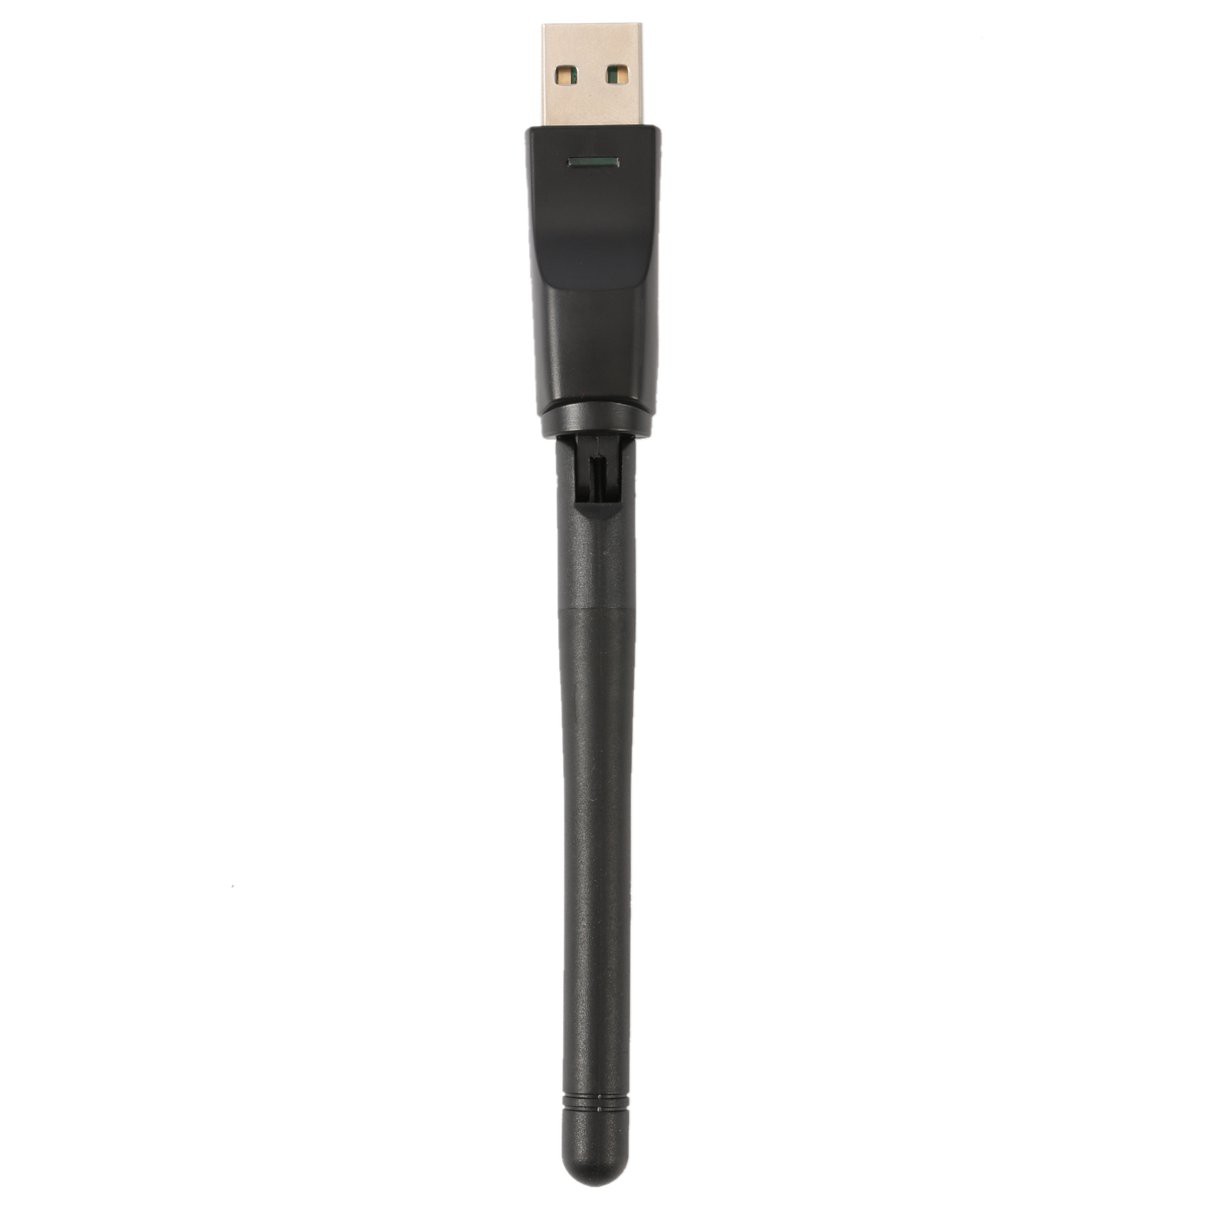 Mini Wireless USB WiFi 150M Network Card LAN Adapter Dongle For PC Laptop